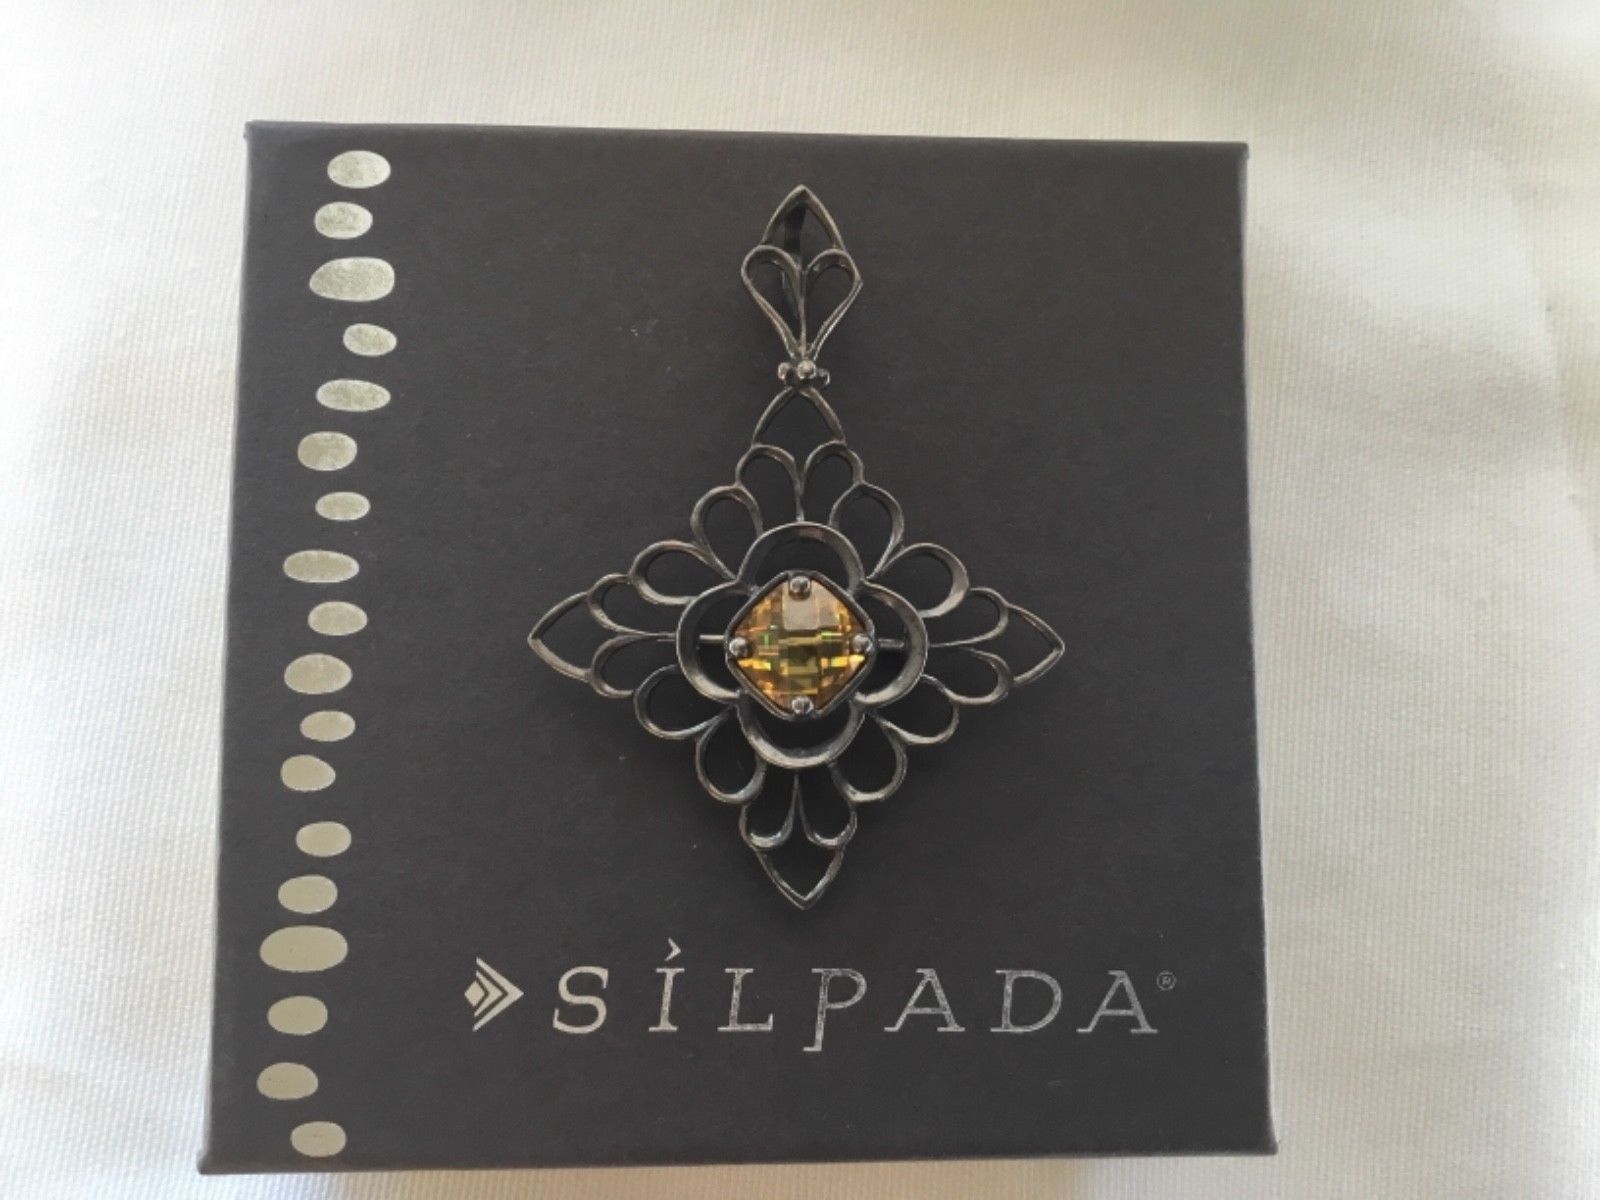 SILPADA Oxidized Sterling Silver Citrine CZ  Center Pendant Pin Brooch S1222 - $48.95